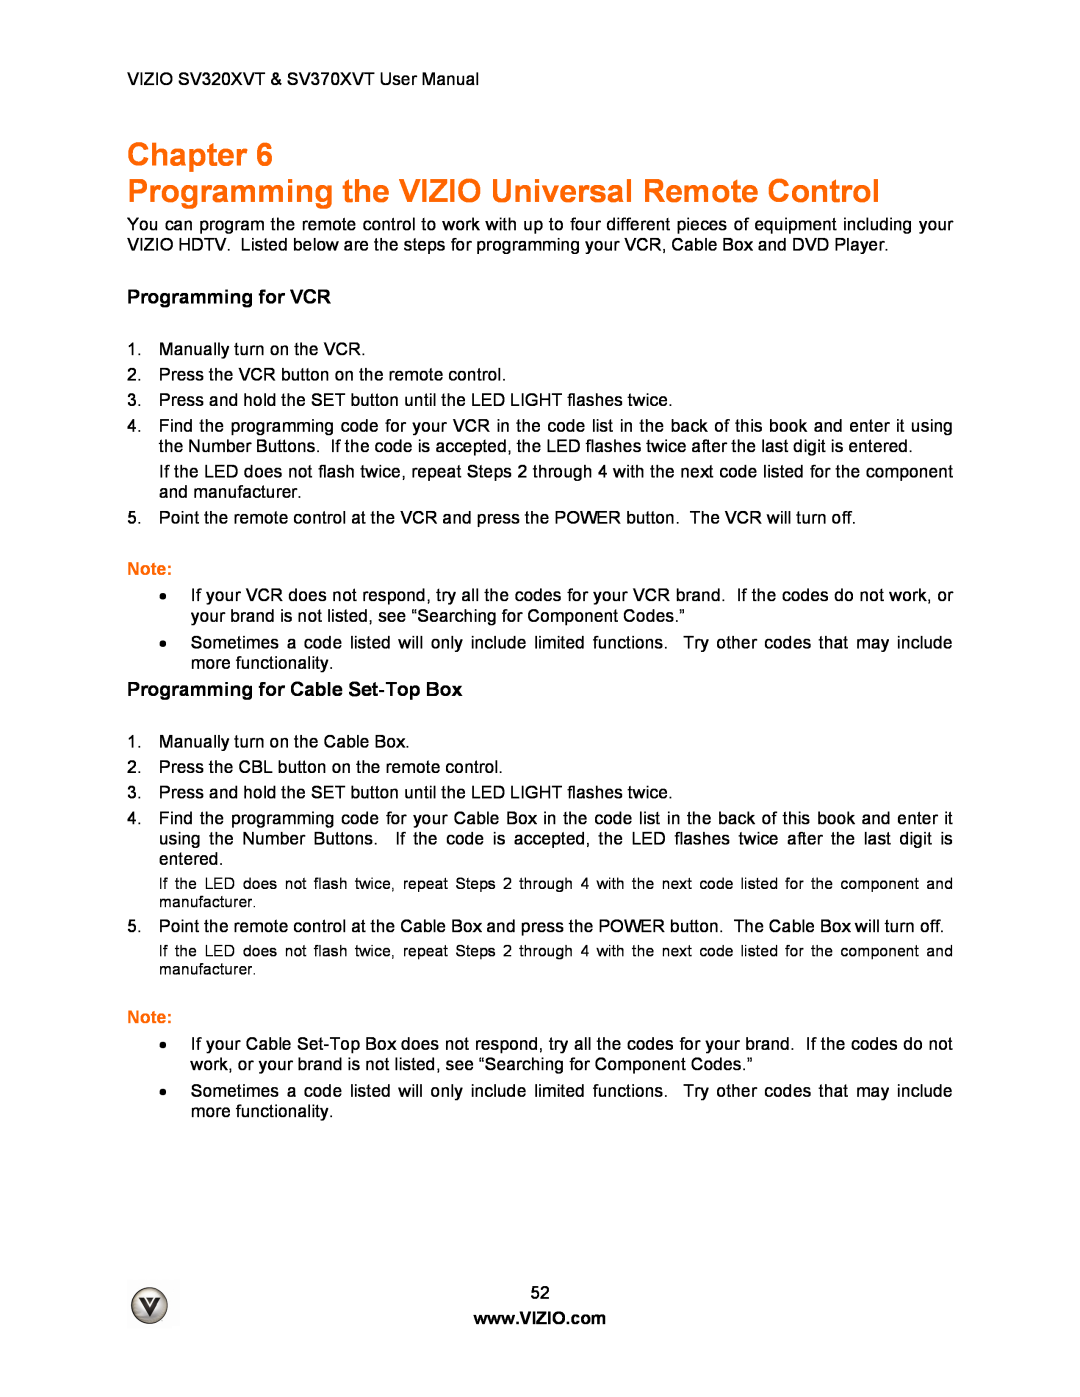 Vizio SV320XVT, SV370XVT user manual Chapter Programming the VIZIO Universal Remote Control, Programming for VCR 